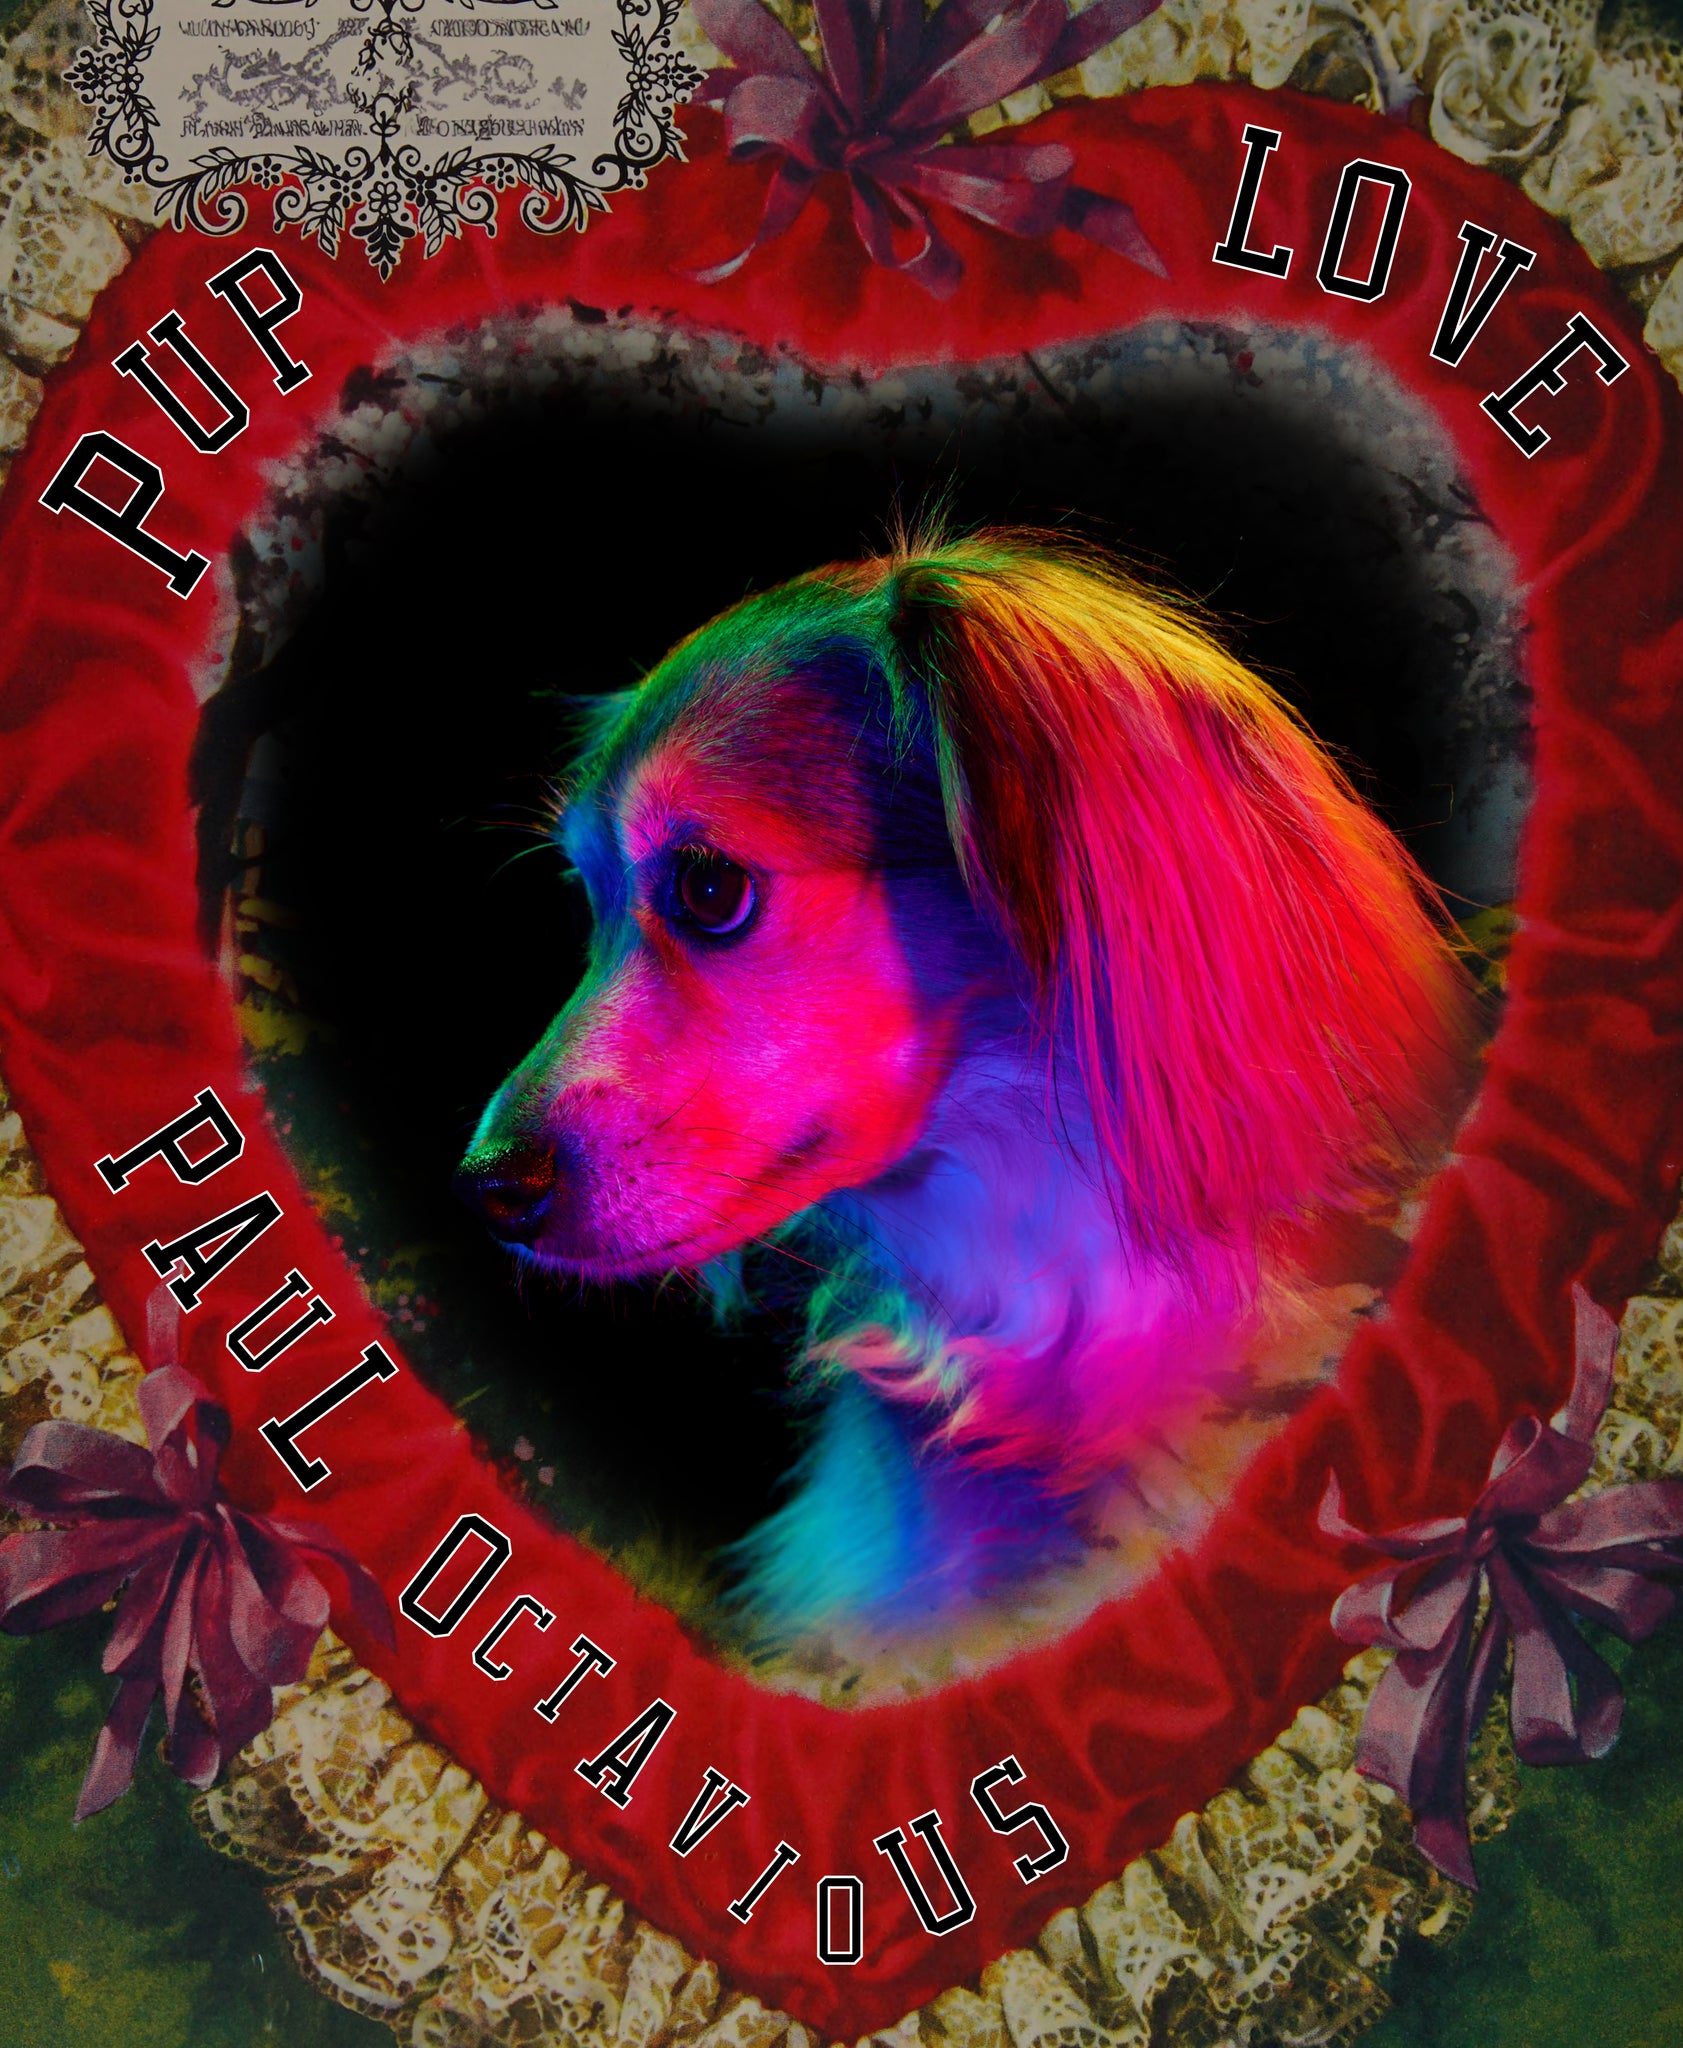 ❤️ Puppy Love Portrait Session by Paul Octavious  / Chicago 2.11 ❤️